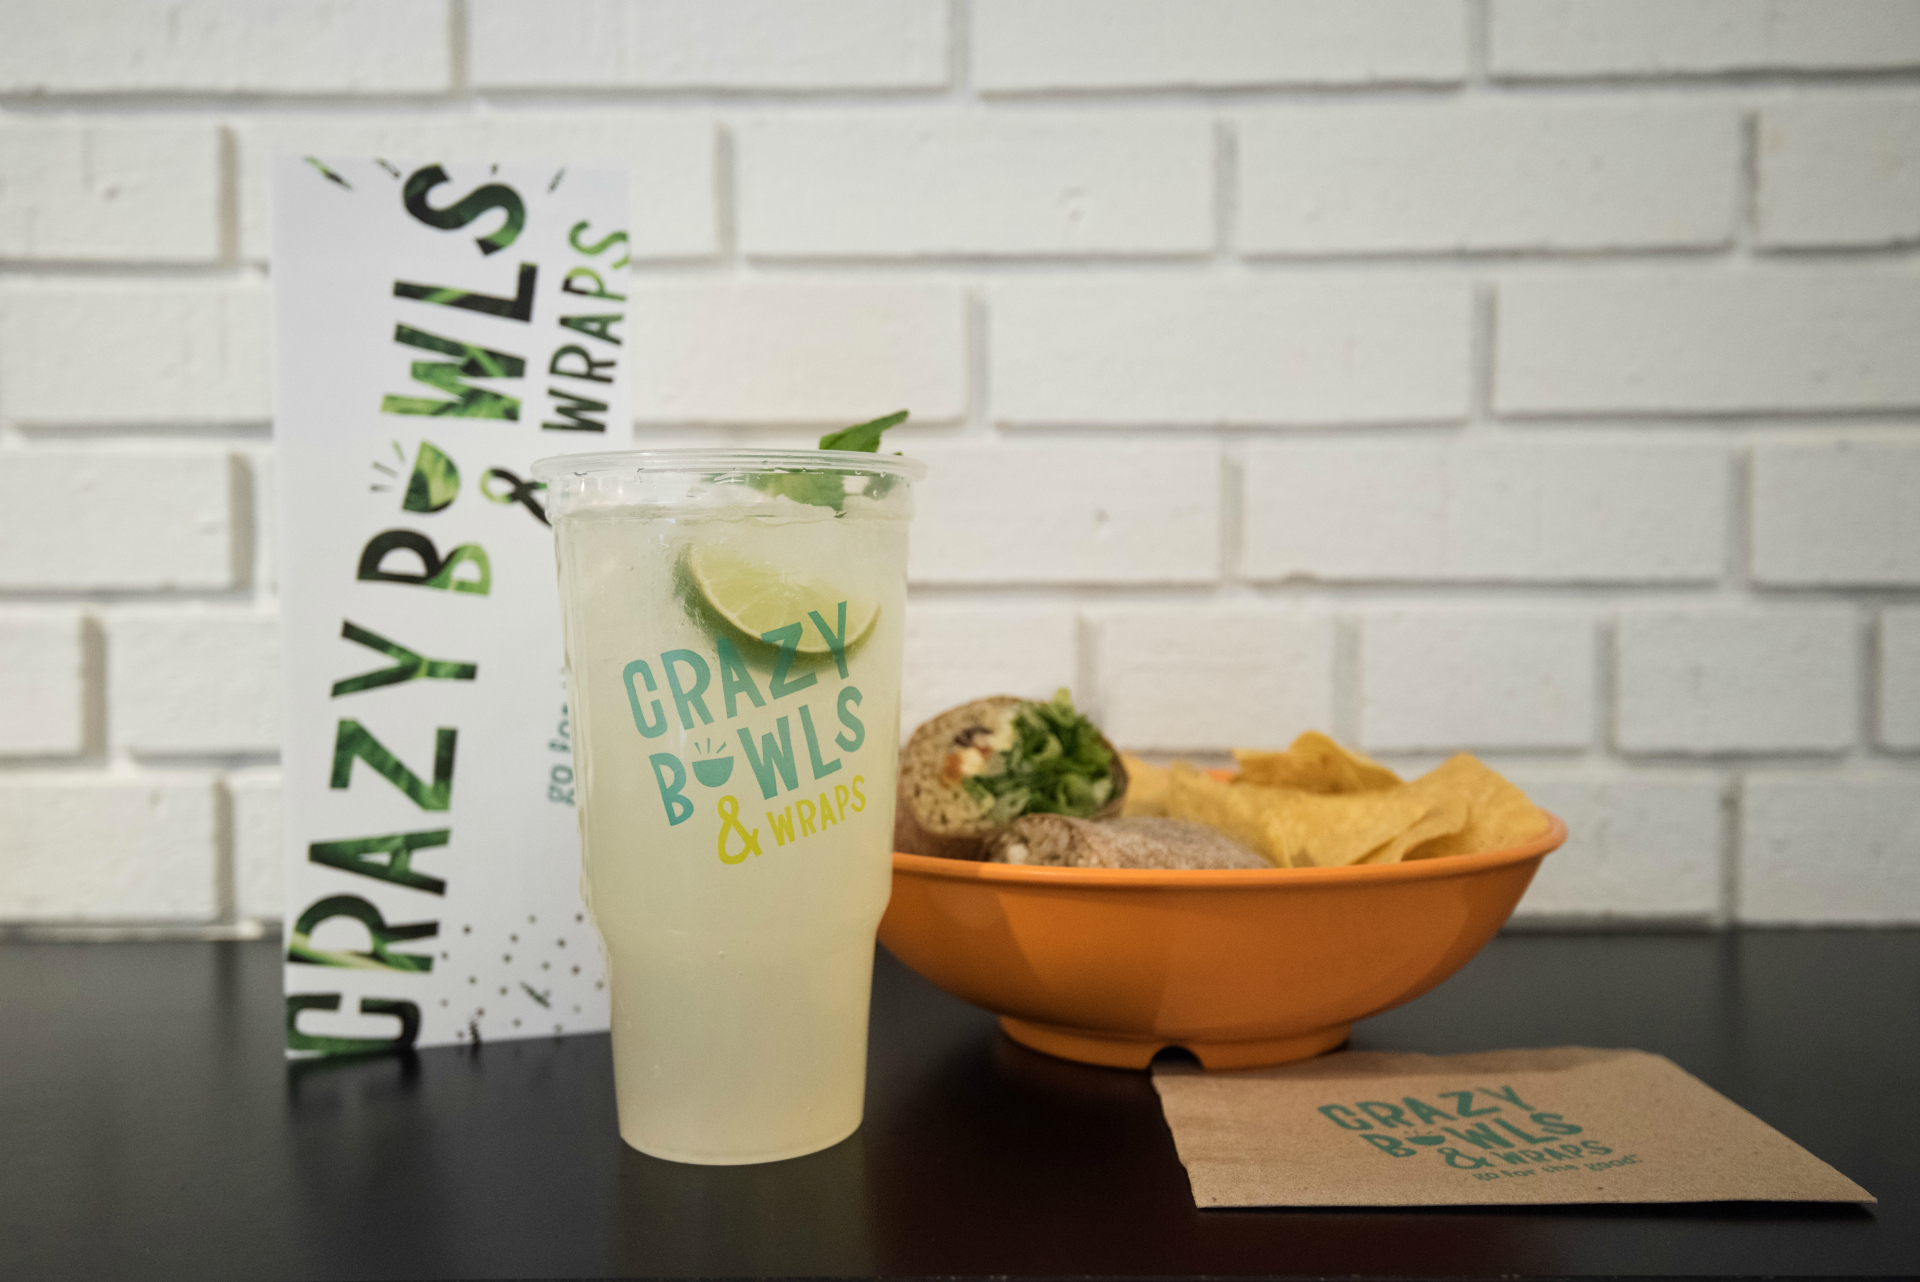 Complete restaurant branding for Crazy Bowls & Wraps